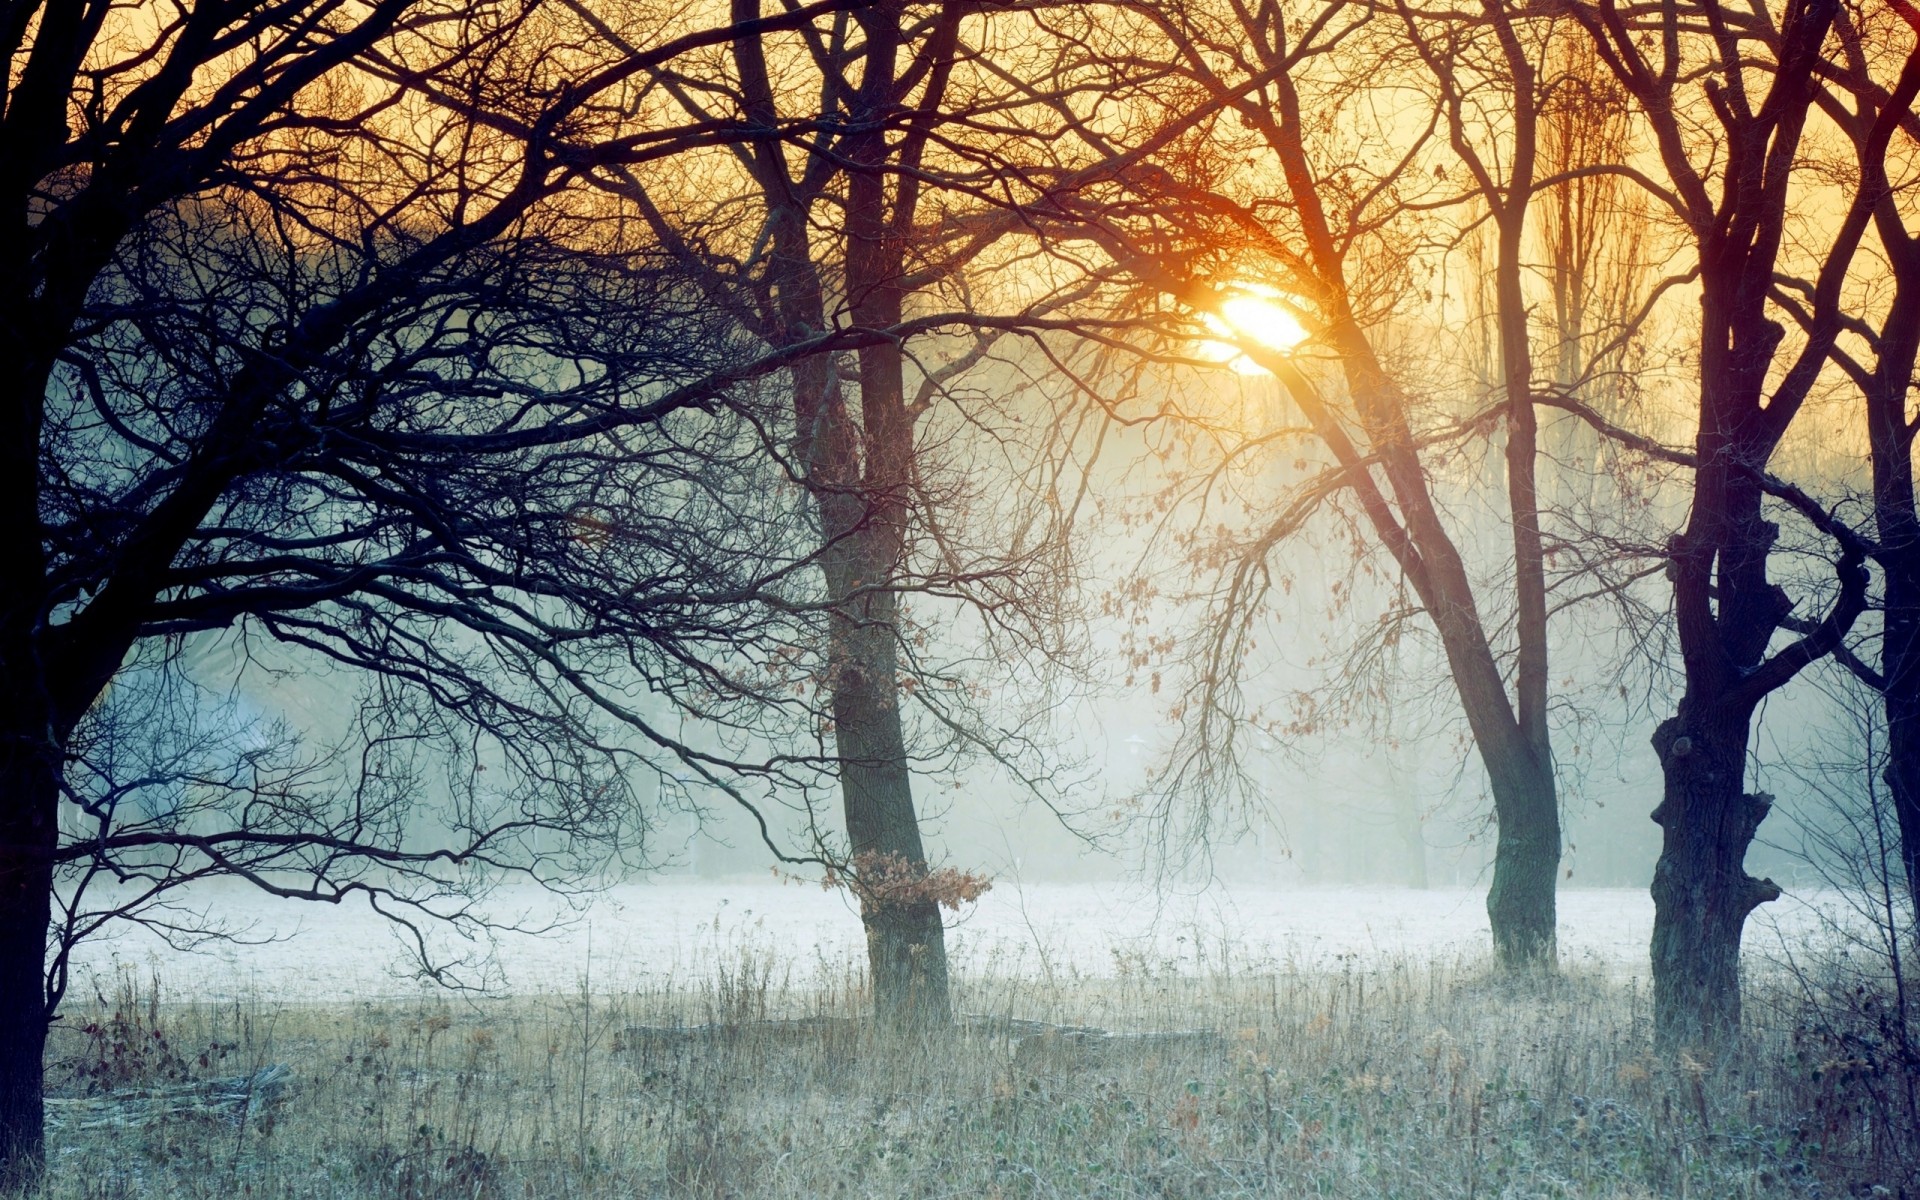 утро трава деревья туман лес центральный парк мороз ветка